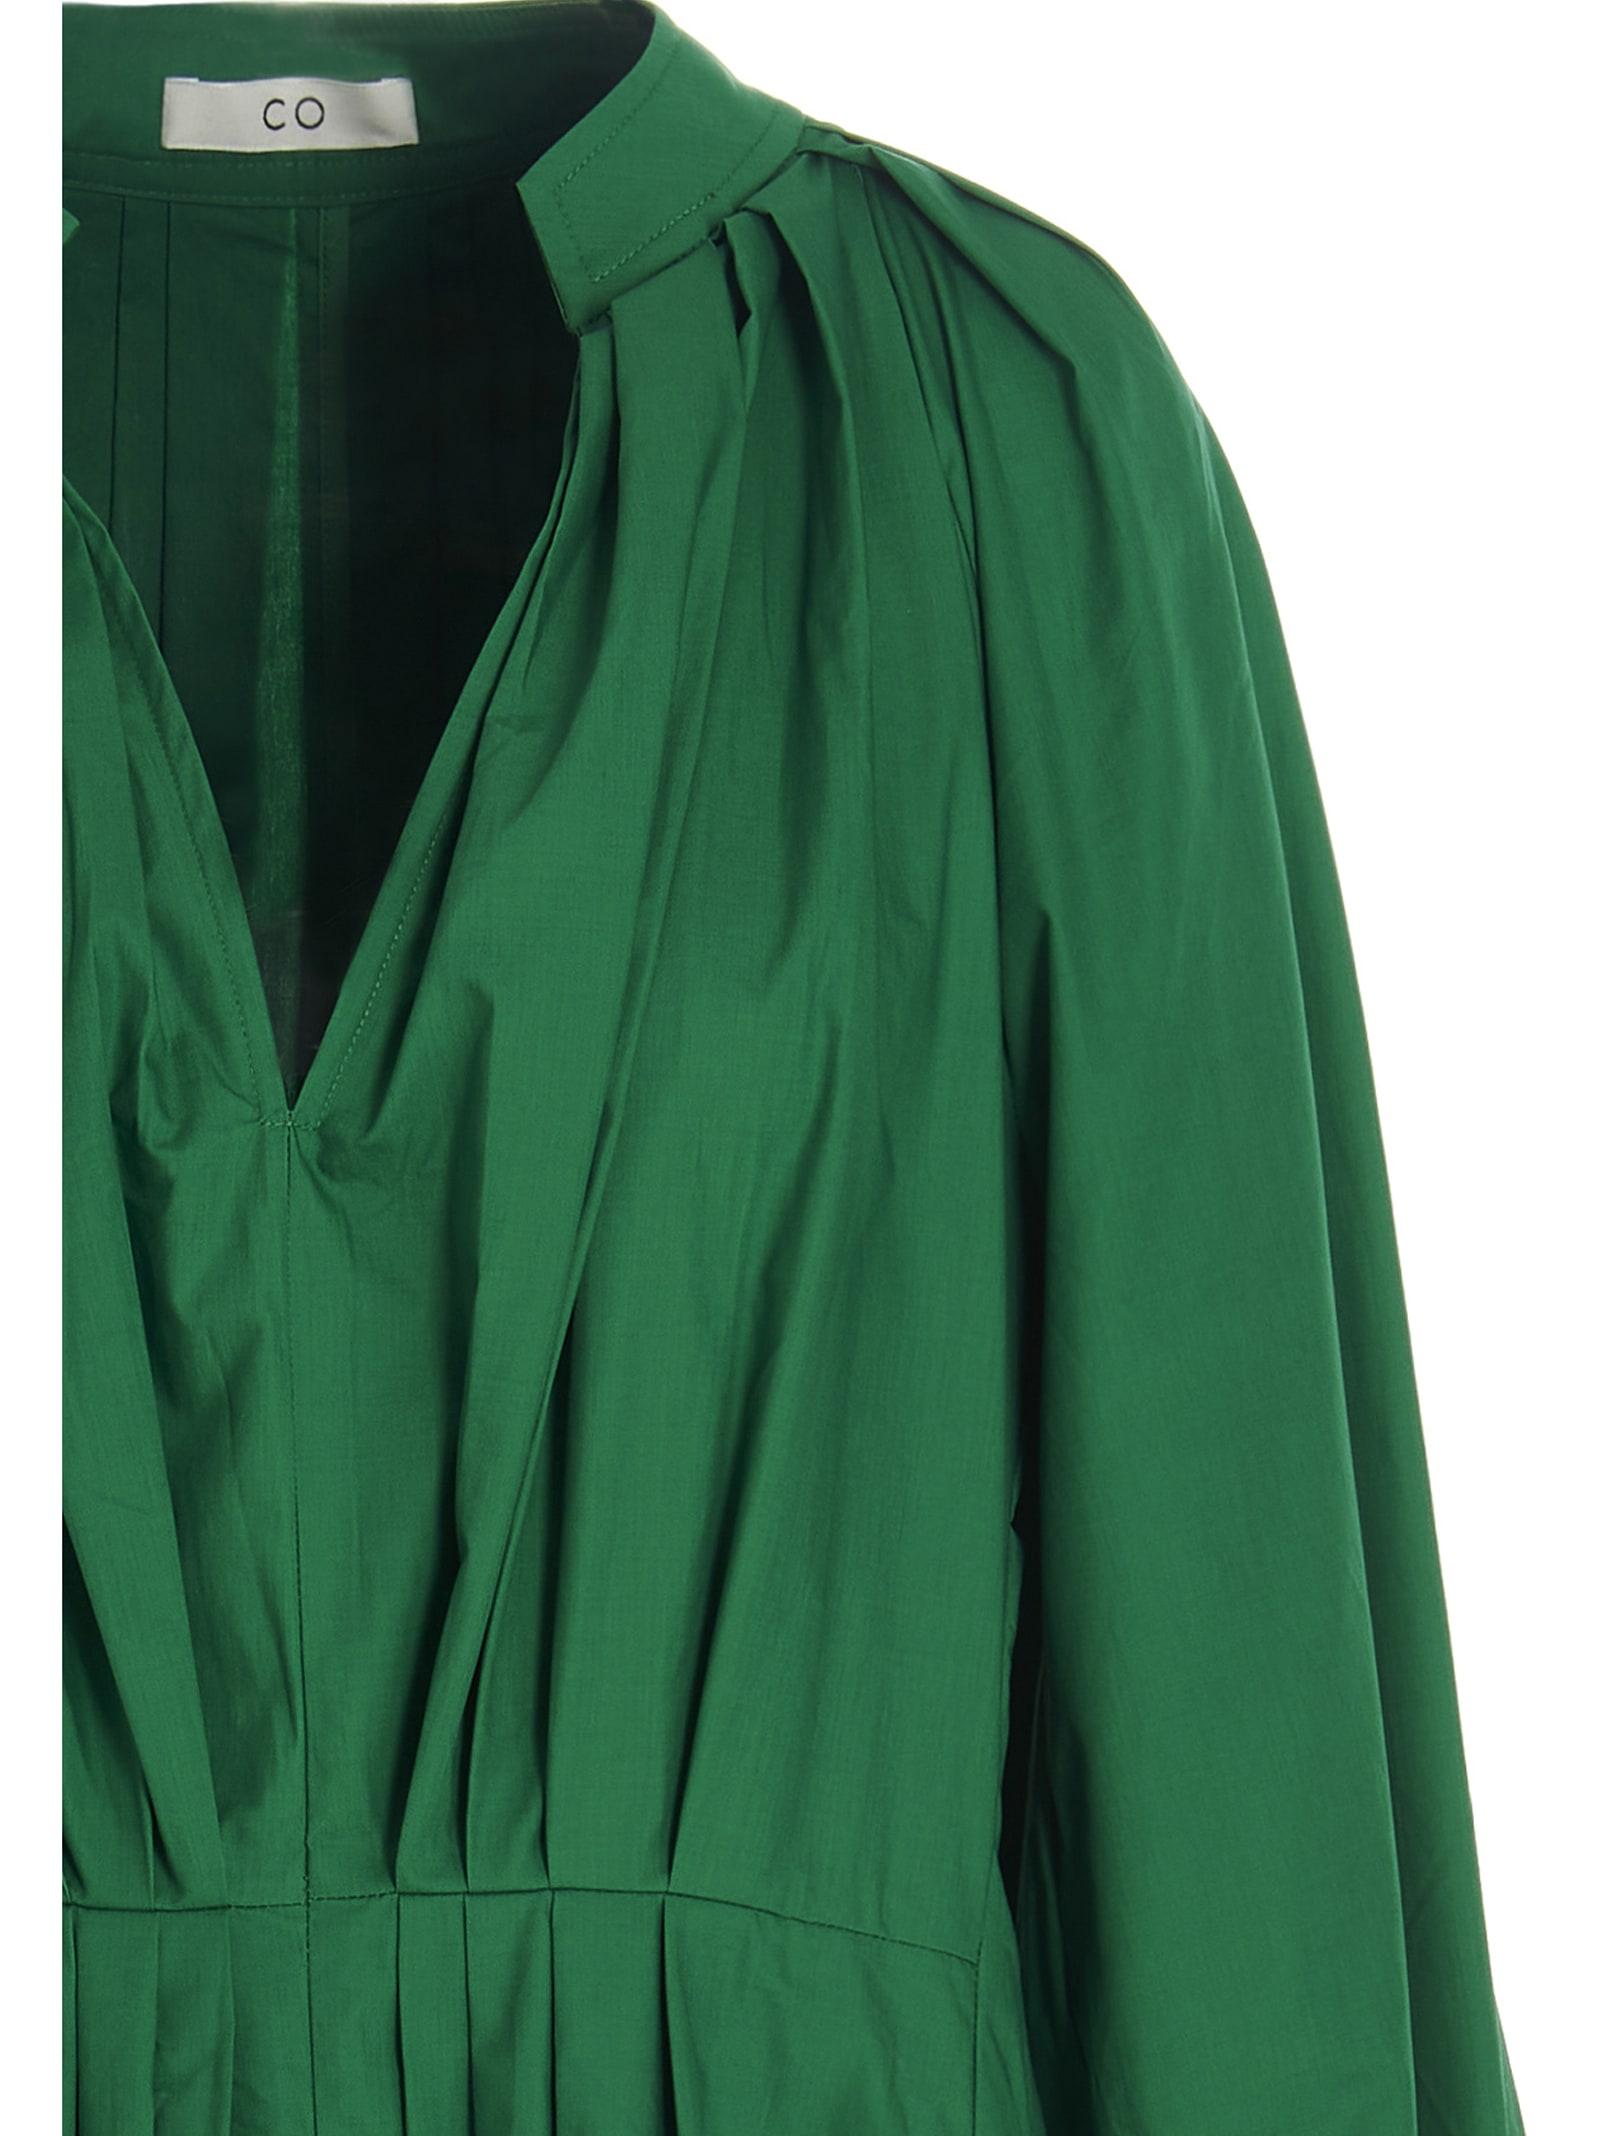 Swirl Dress Cotton Jersey Hooded Cowl Neck-Moss Green Marl - Haruka